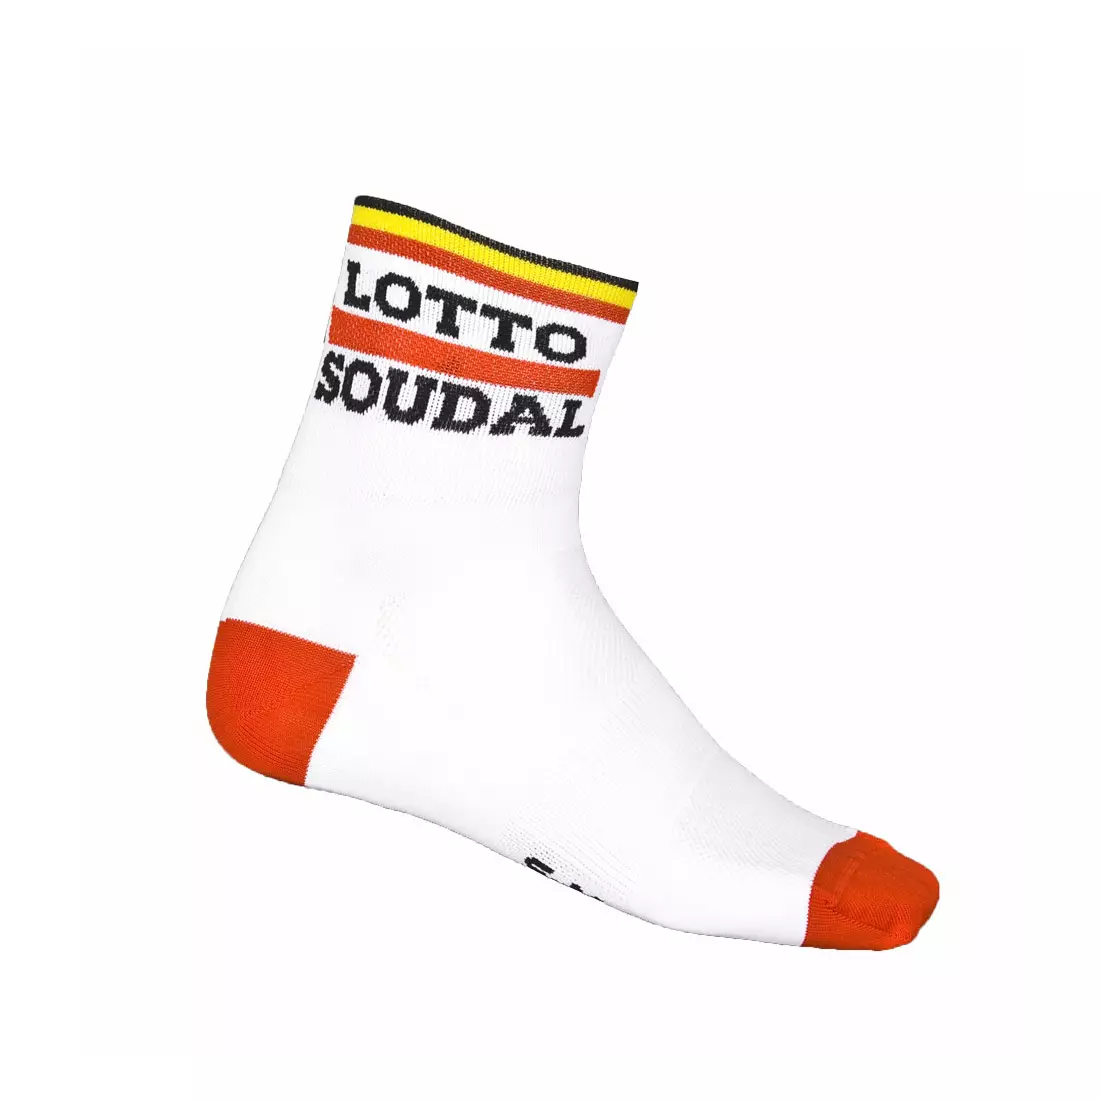 LOTTO SOUDAL cycling socks 2015